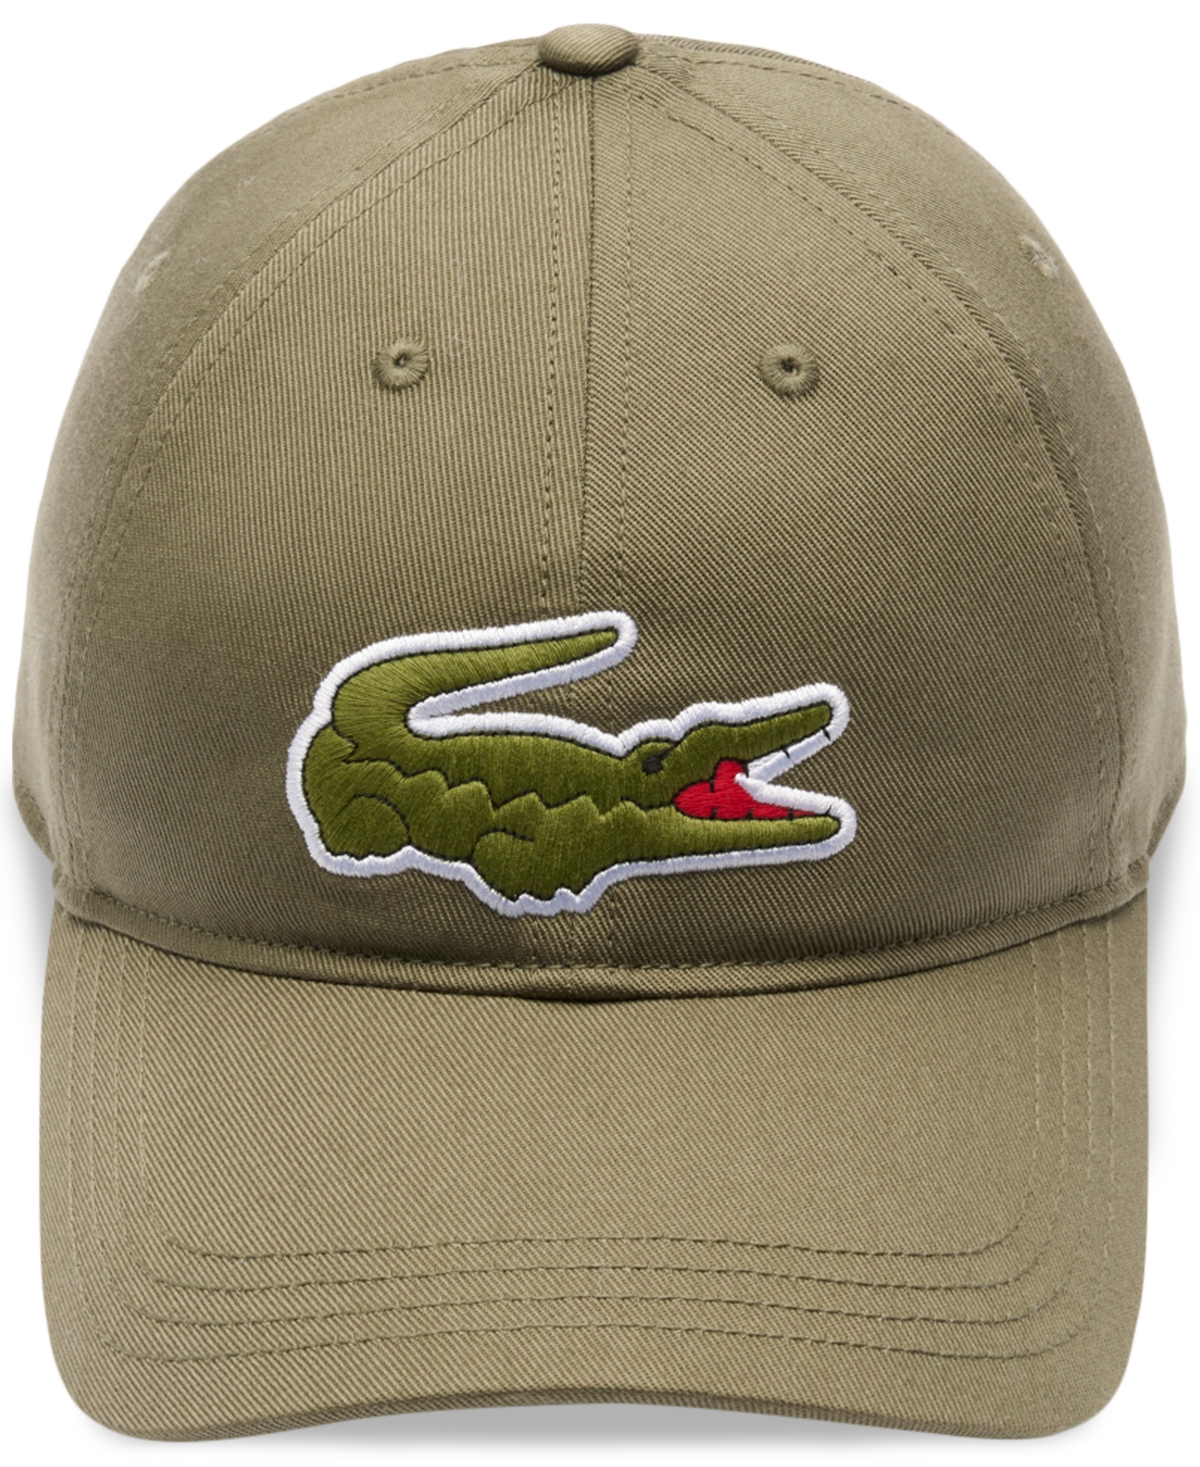 Lacoste Men's Water-Resistant Golf Cap - One Size